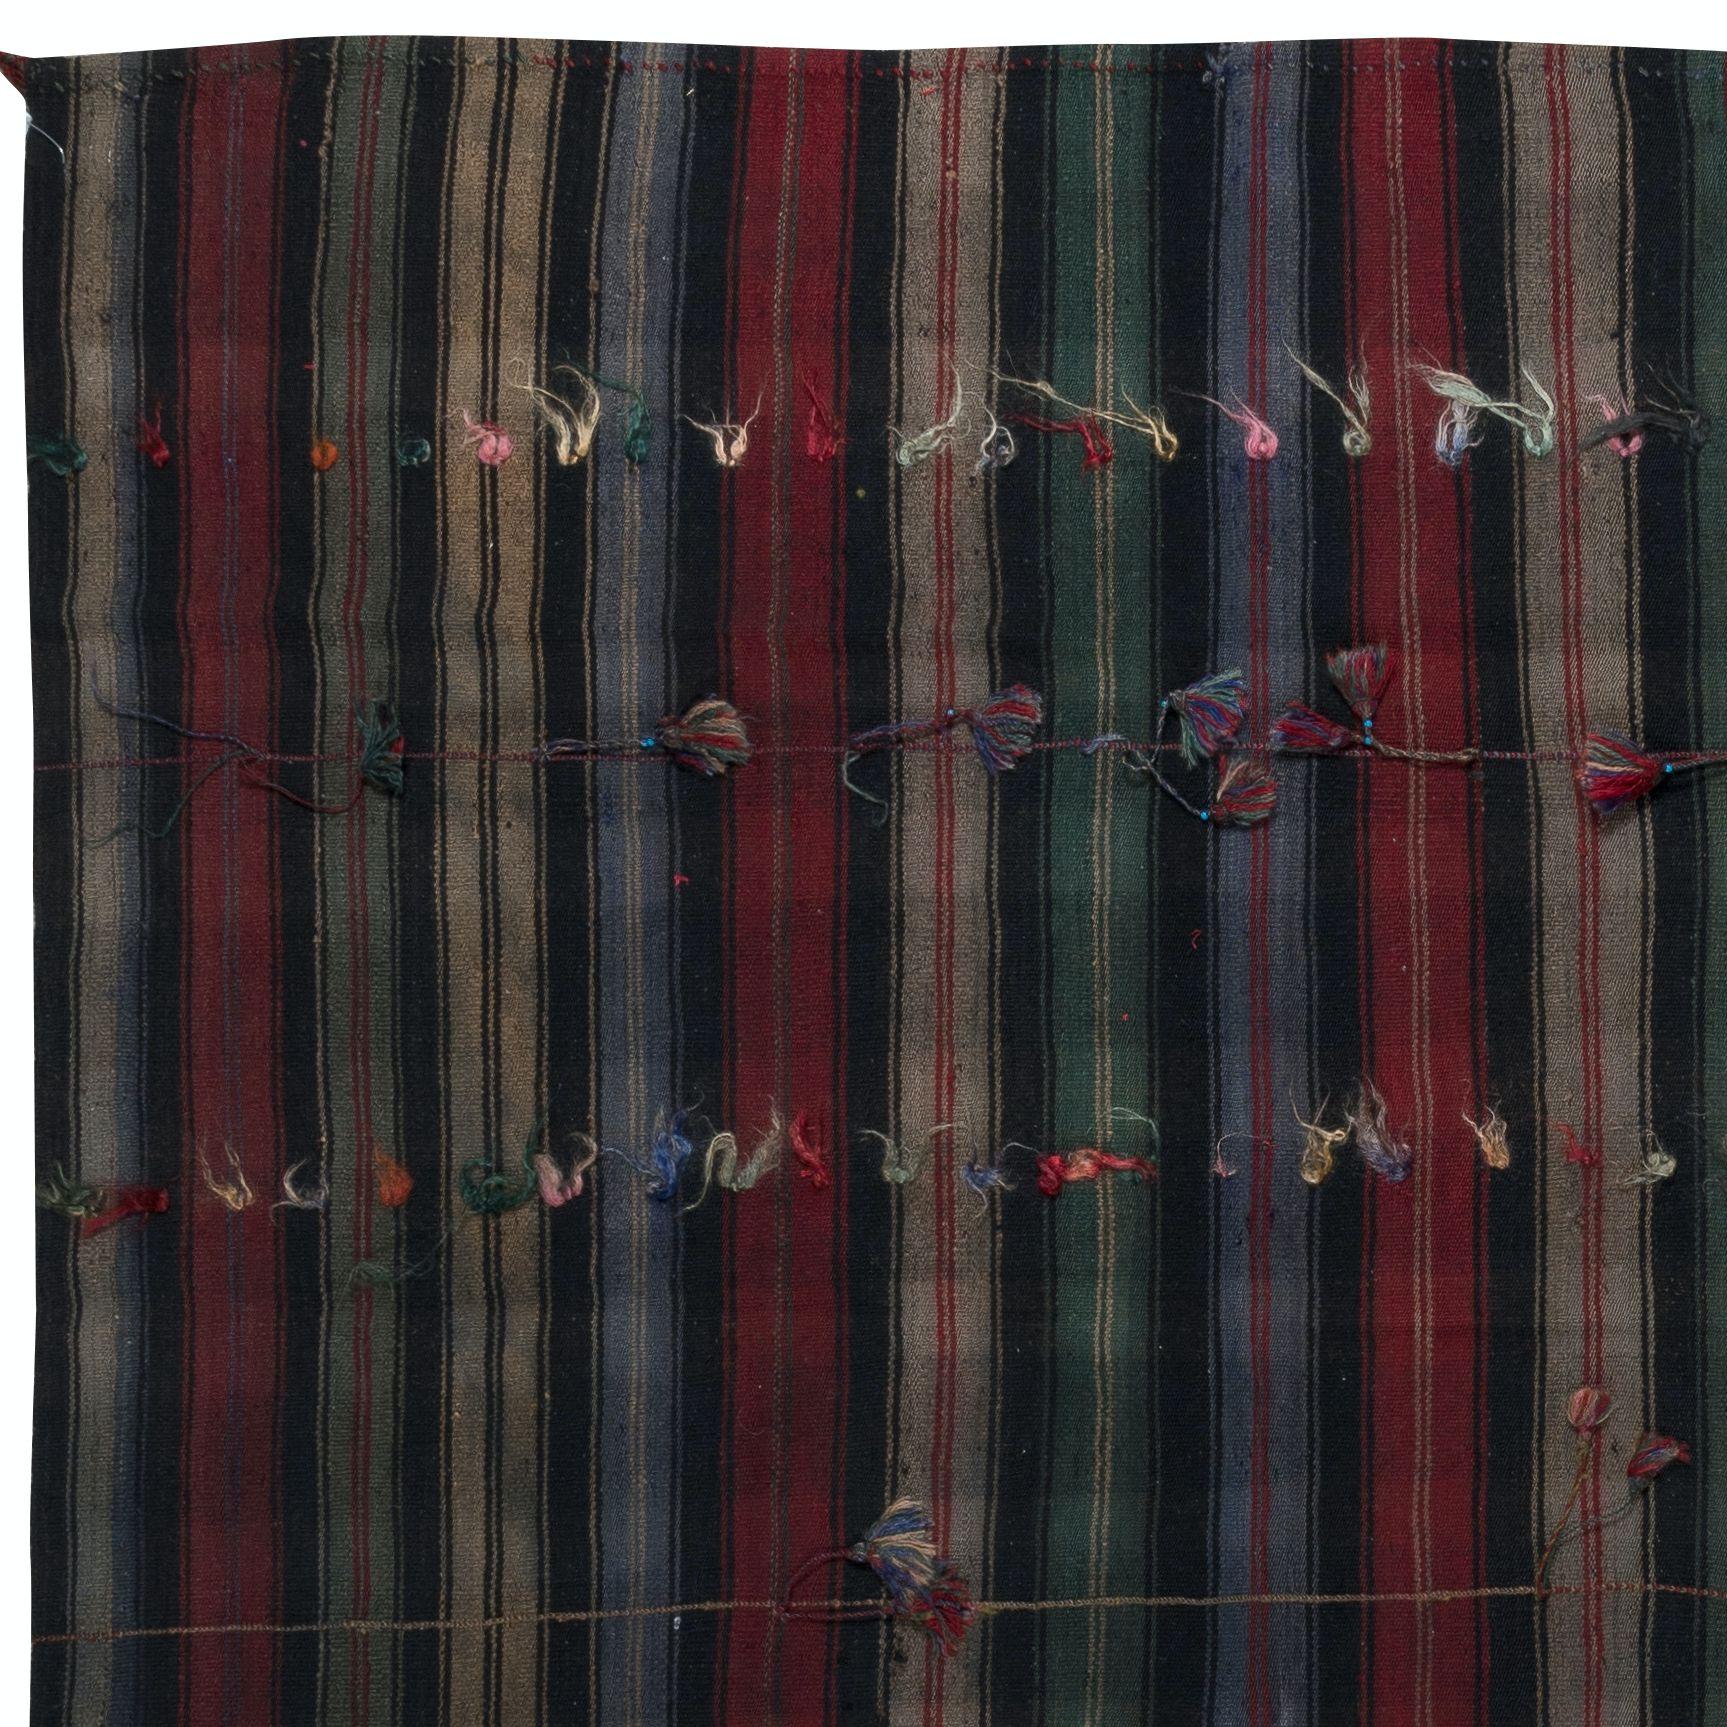 Turkish 5.6x6.2 Ft Hand-Woven Striped Kilim, Vintage Flat-Weave Anatolian Rug For Sale